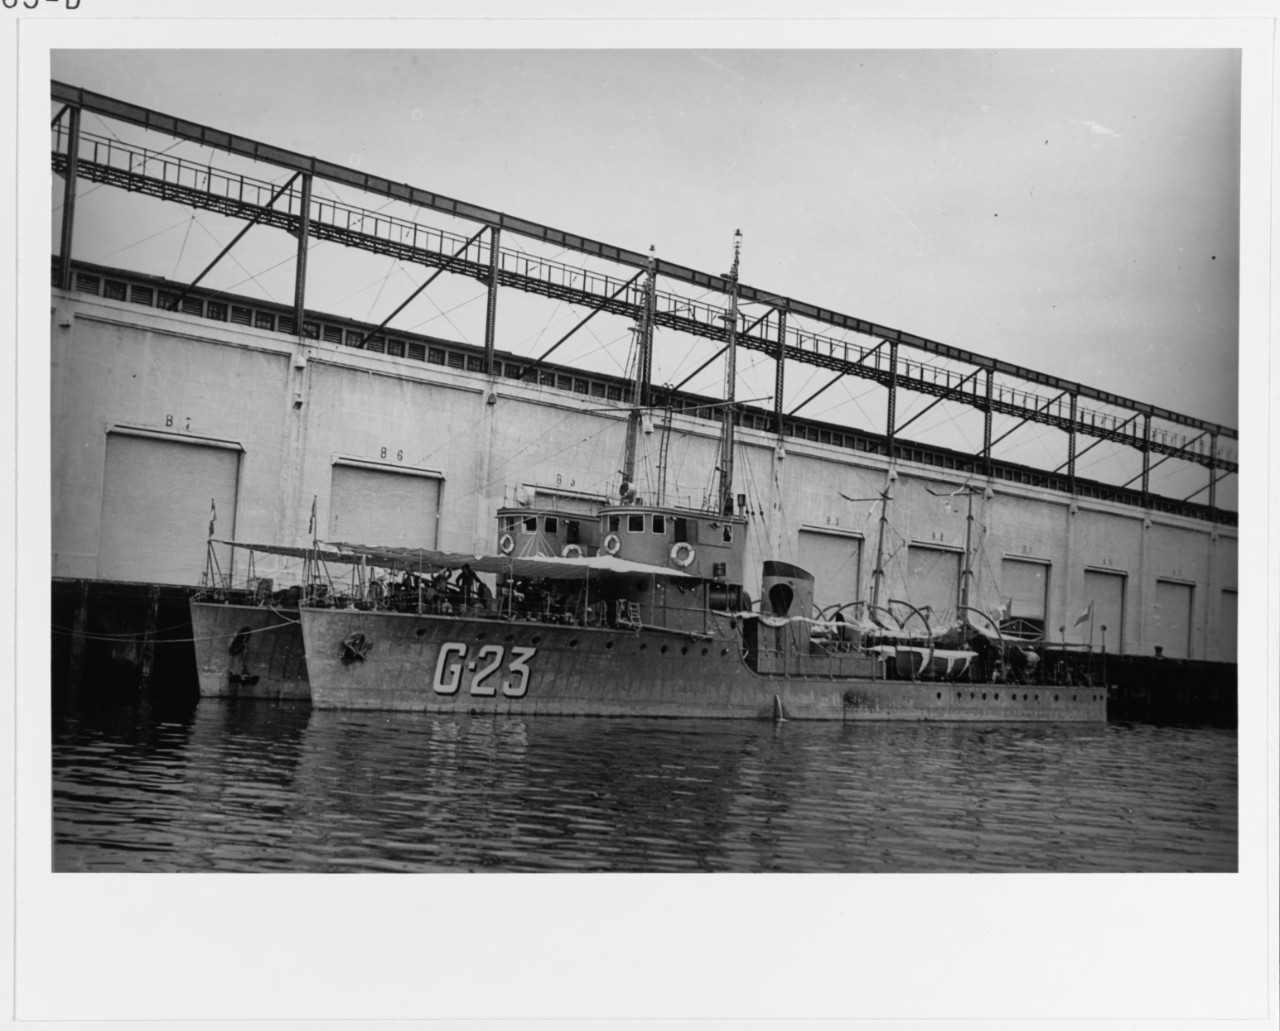 G-23 (Mexican patrol vessel, 1934-1954)